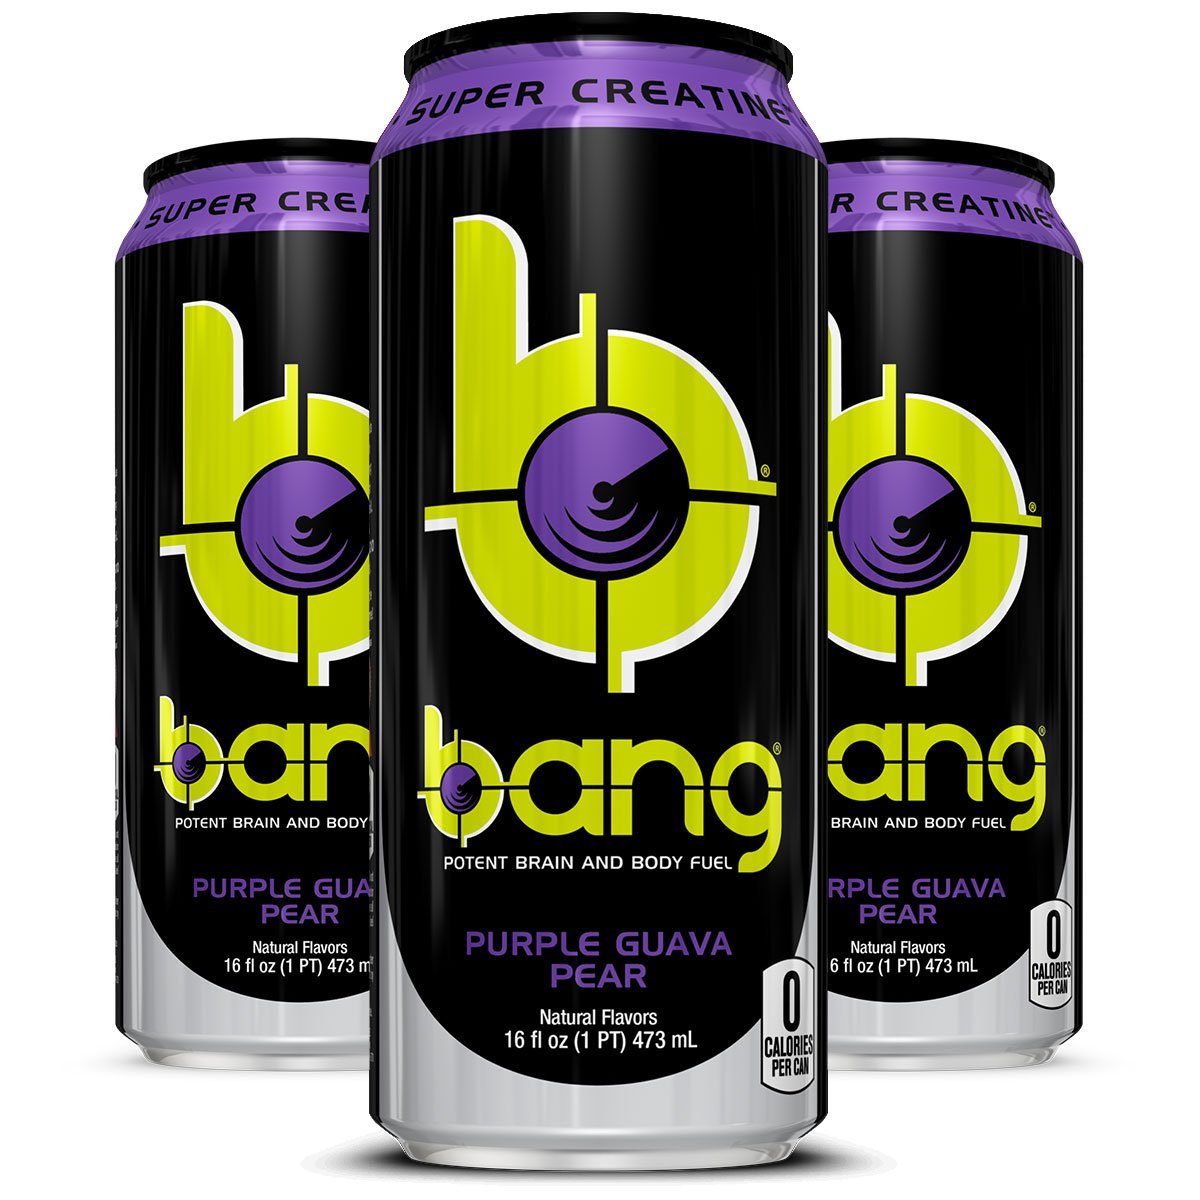 bang energy drink